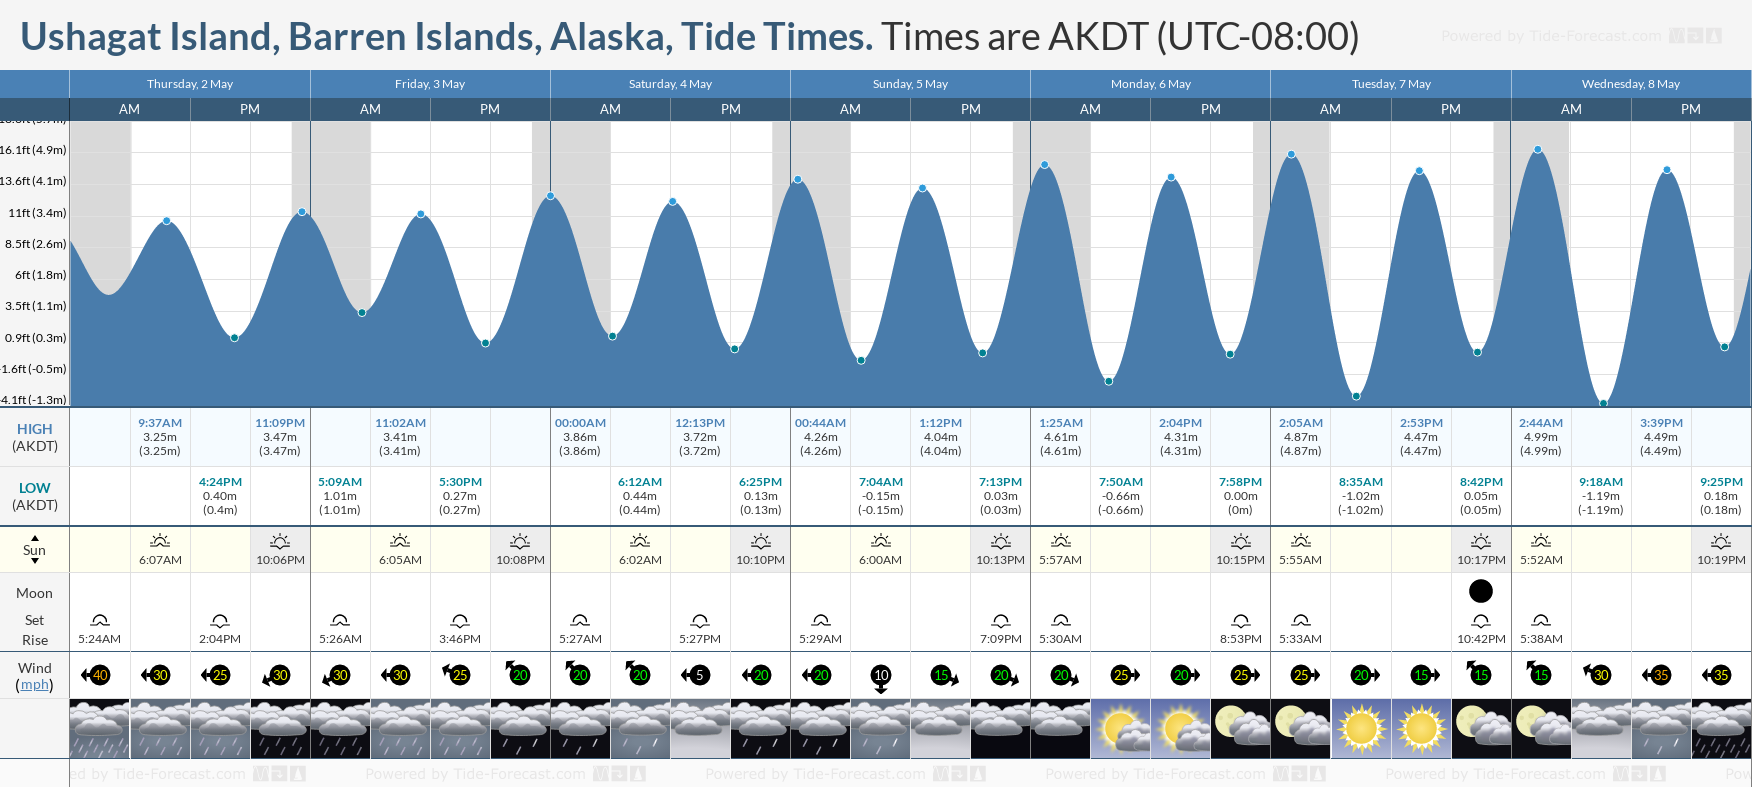 Ushagat Island, Barren Islands, Alaska Tide Chart including high and low tide tide times for the next 7 days